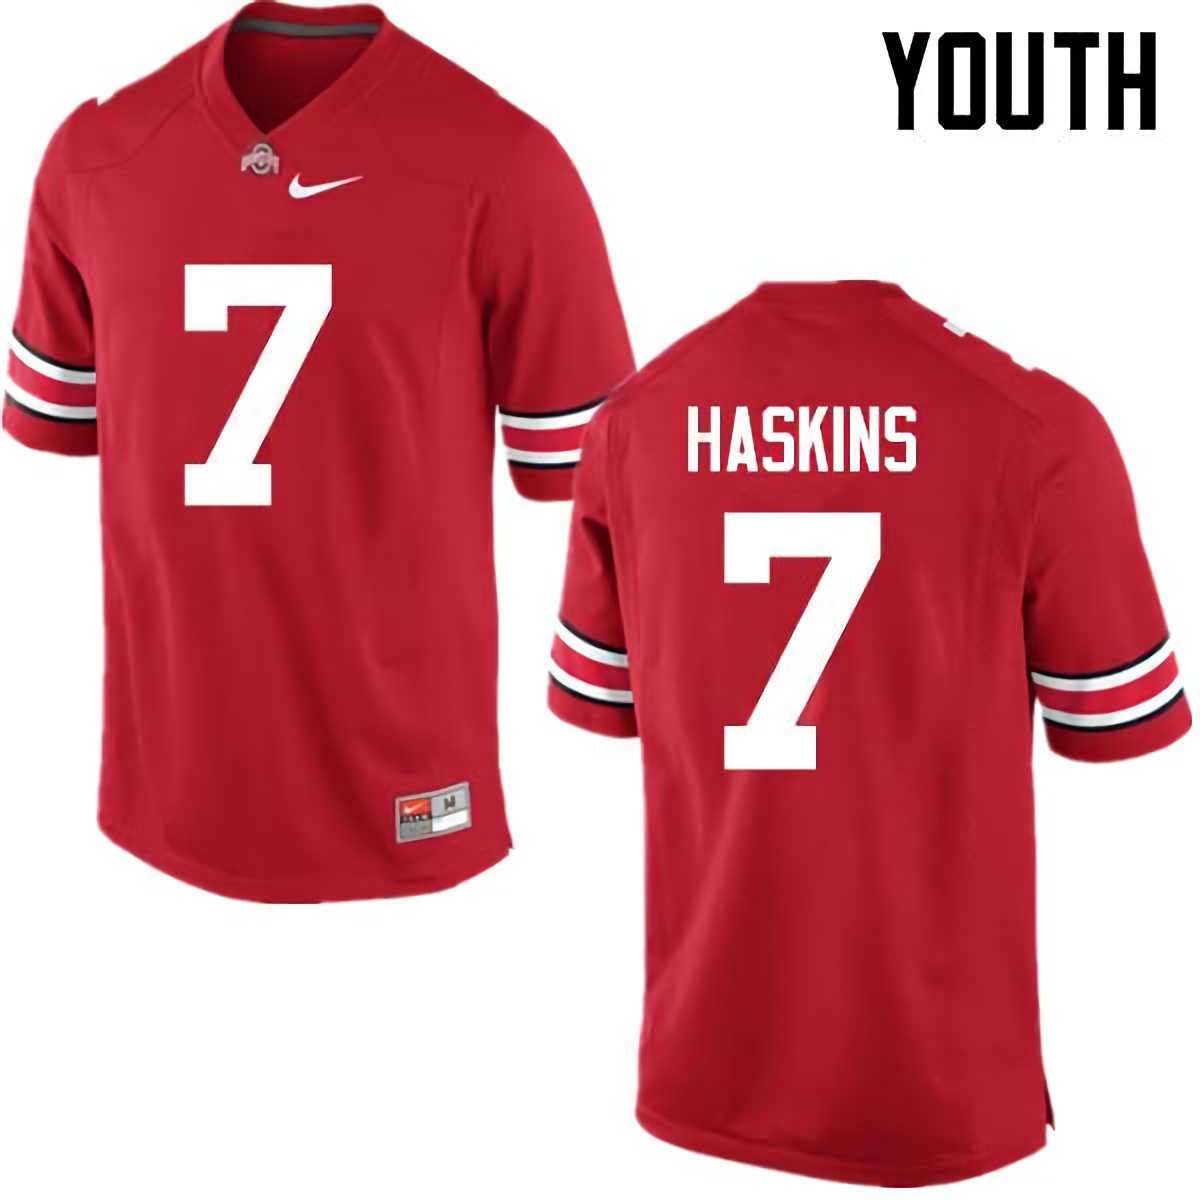 Dwayne Haskins Ohio State Buckeyes Youth NCAA #7 Nike Red College Stitched Football Jersey DFU7556DJ